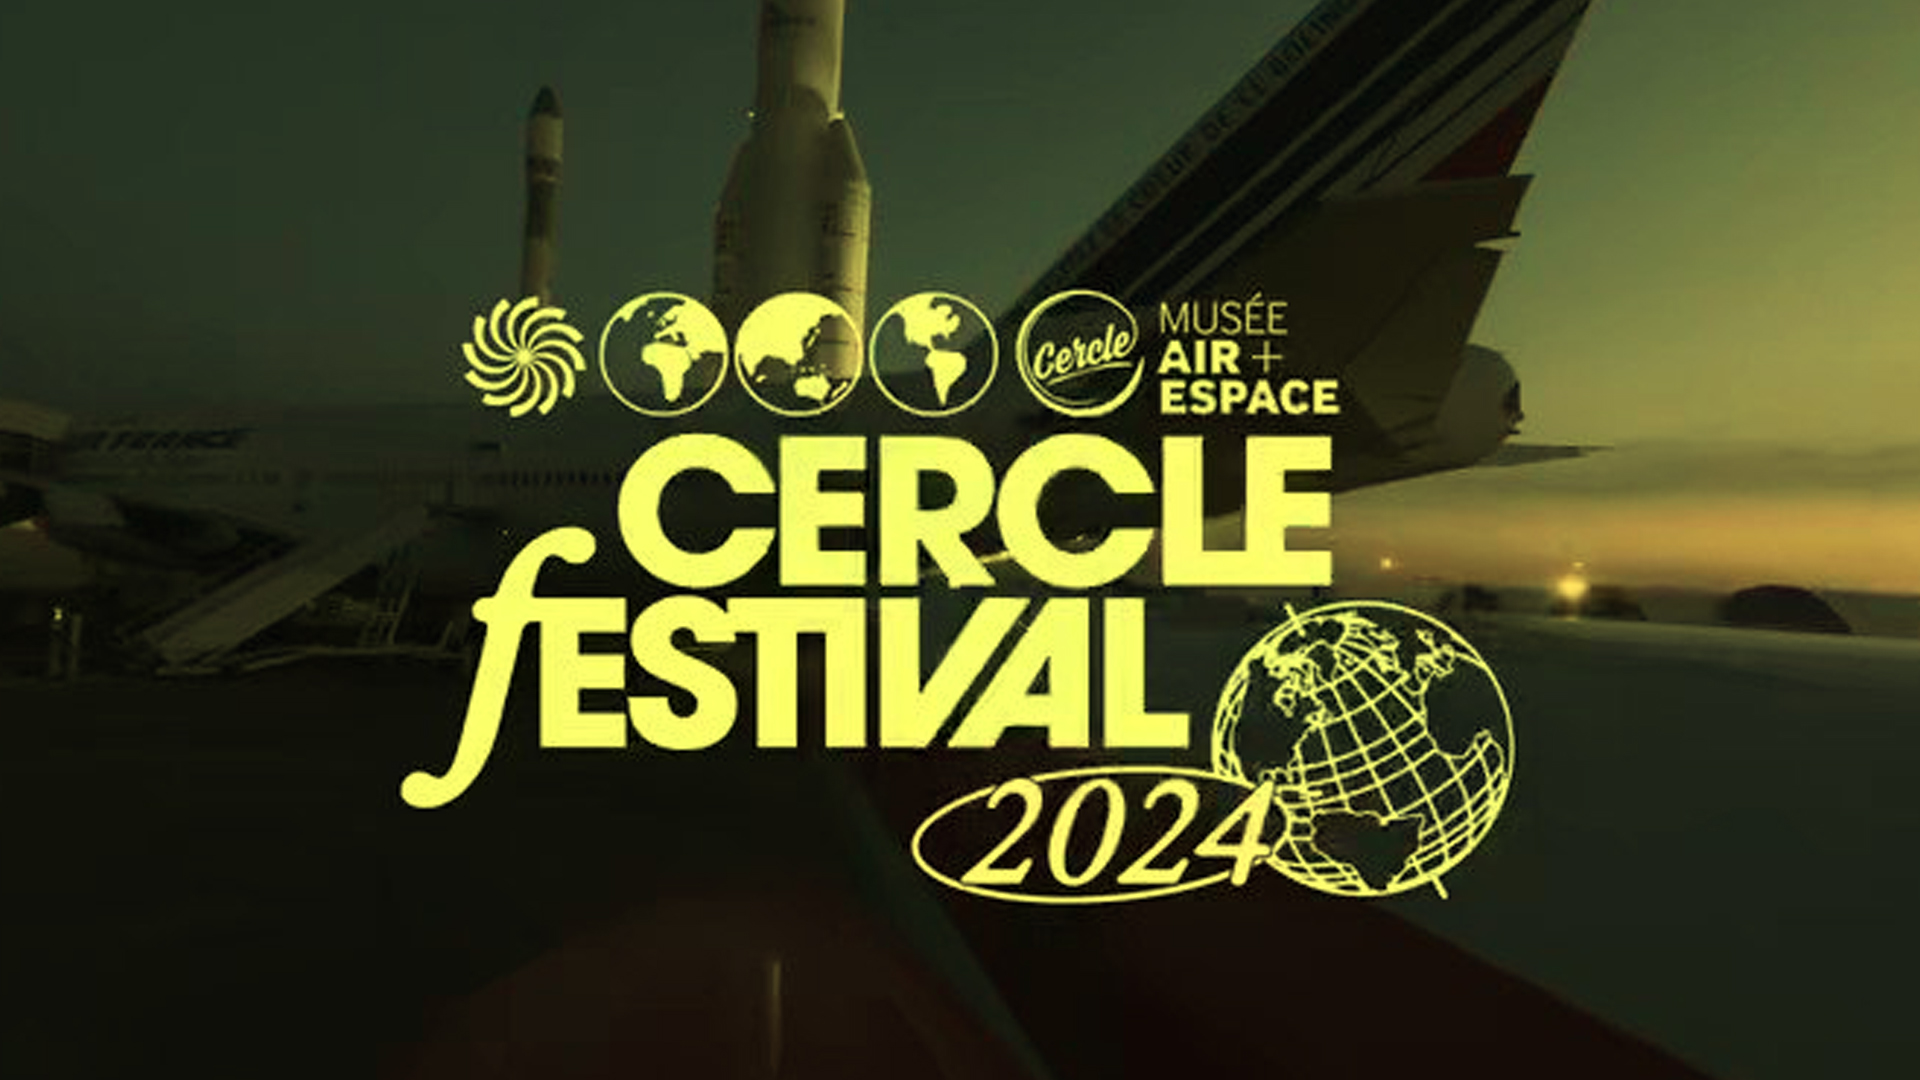 Cercle Festival 2024 Paris Air and Space Museum